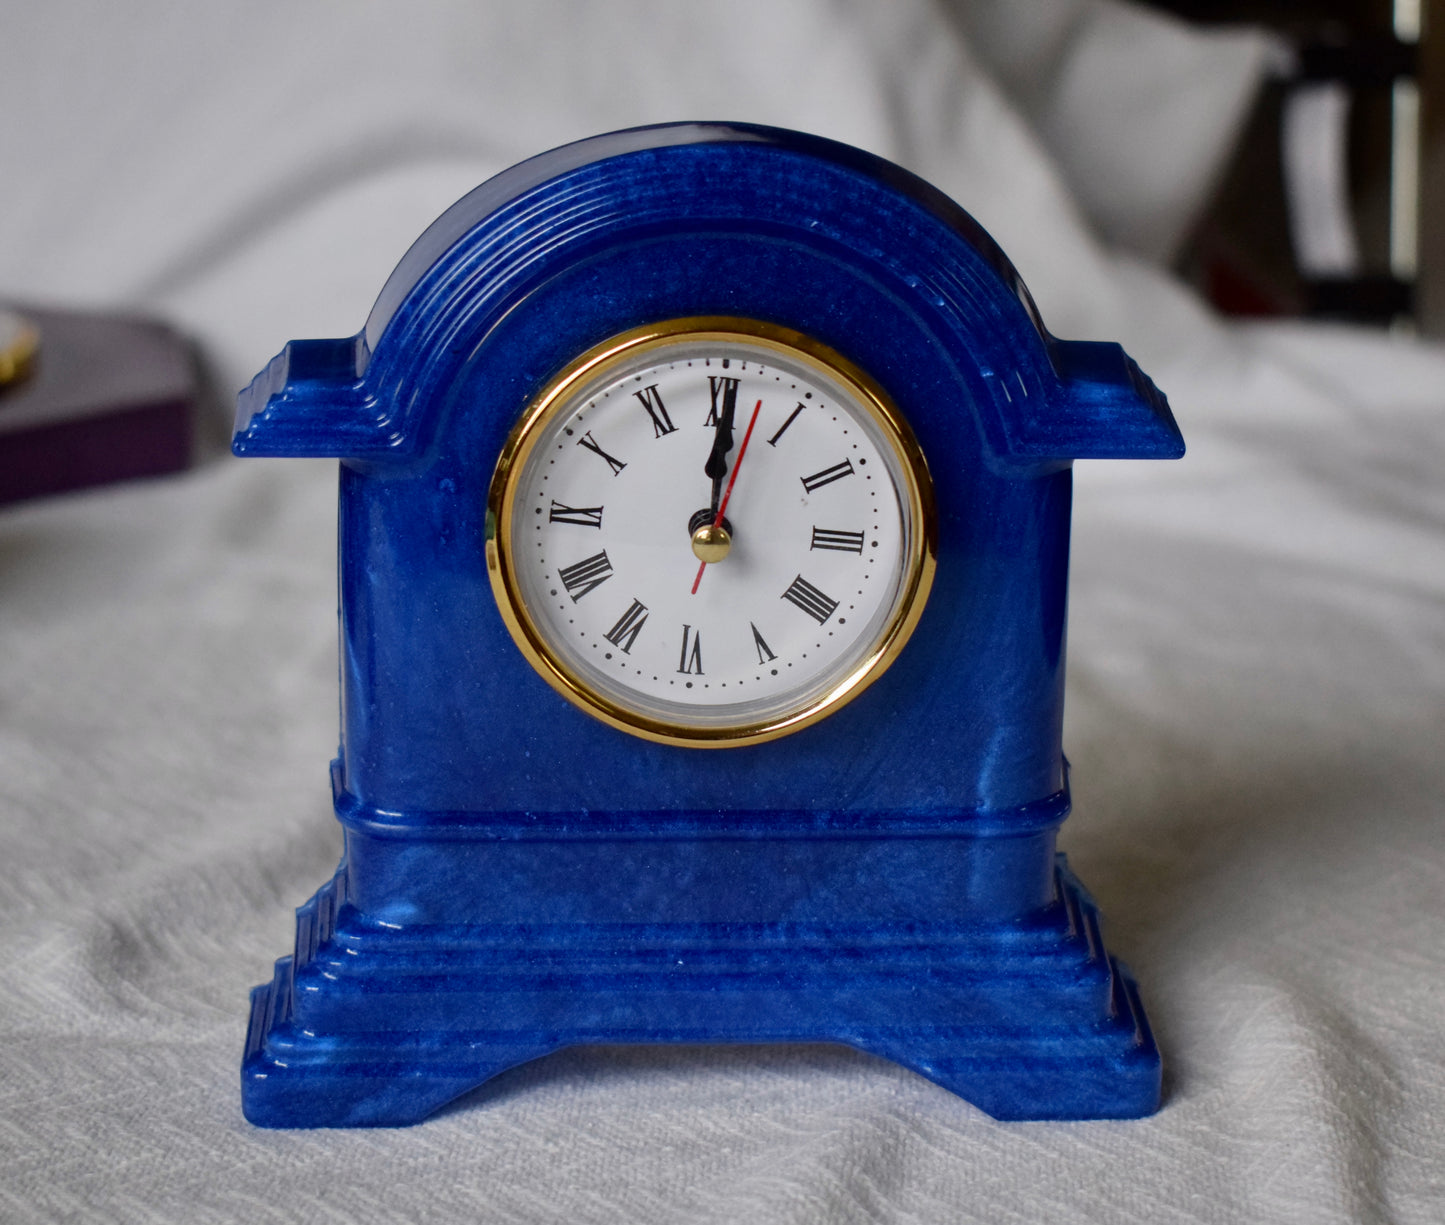 Small resin Mantle or Desktop Clocks